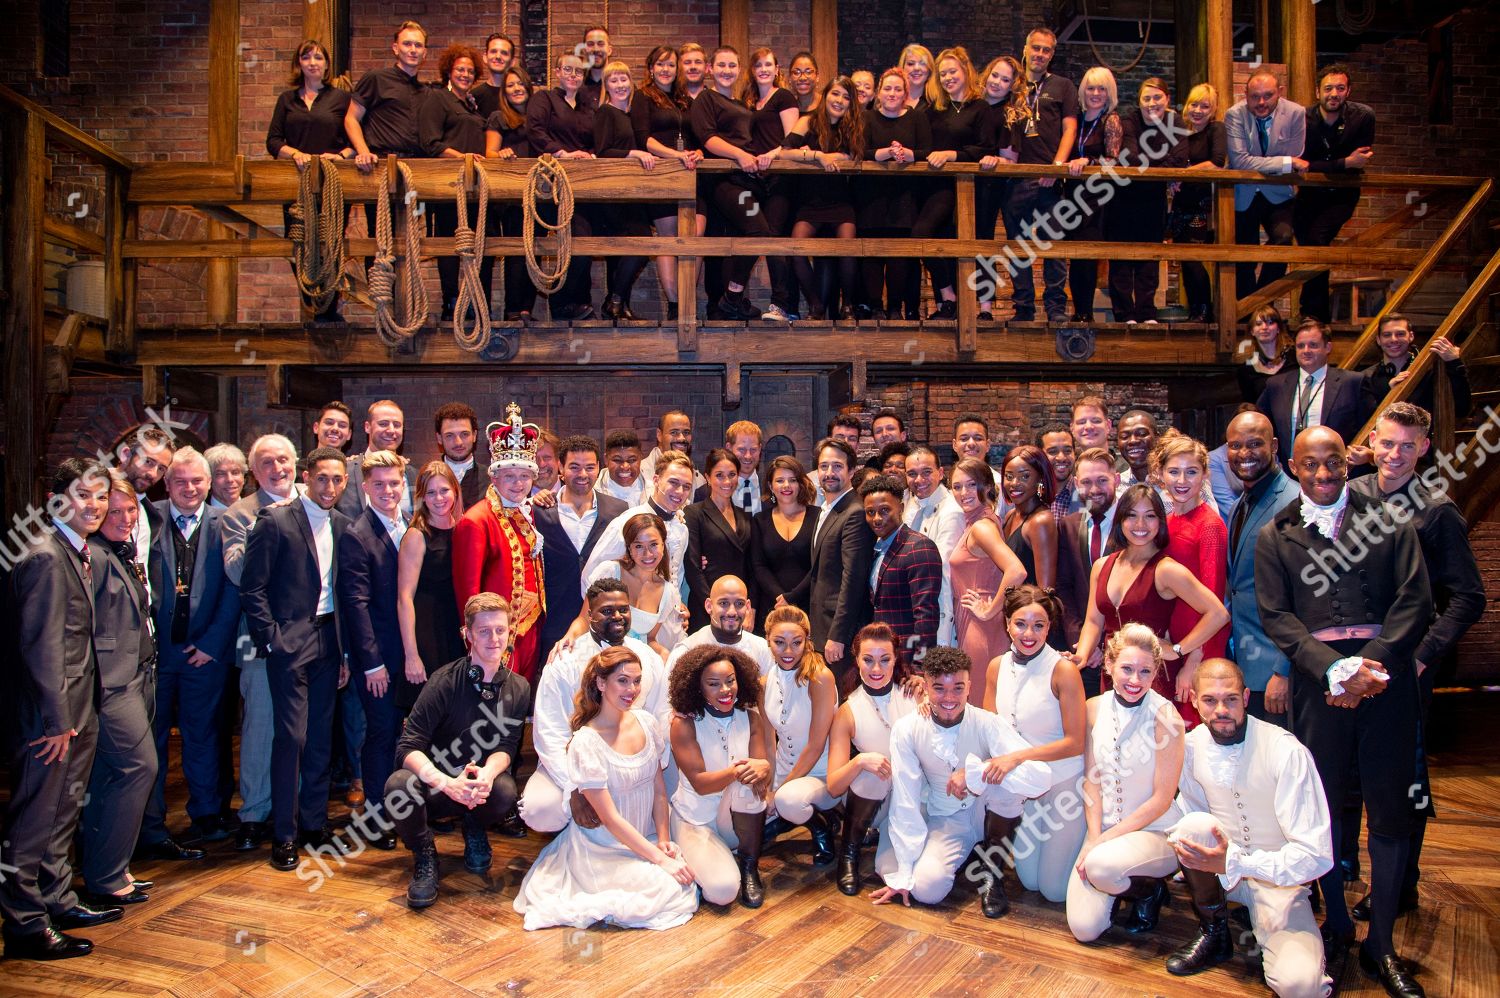 hamilton-gala-performance-victoria-palace-theatre-london-uk-shutterstock-editorial-9826931af.jpg